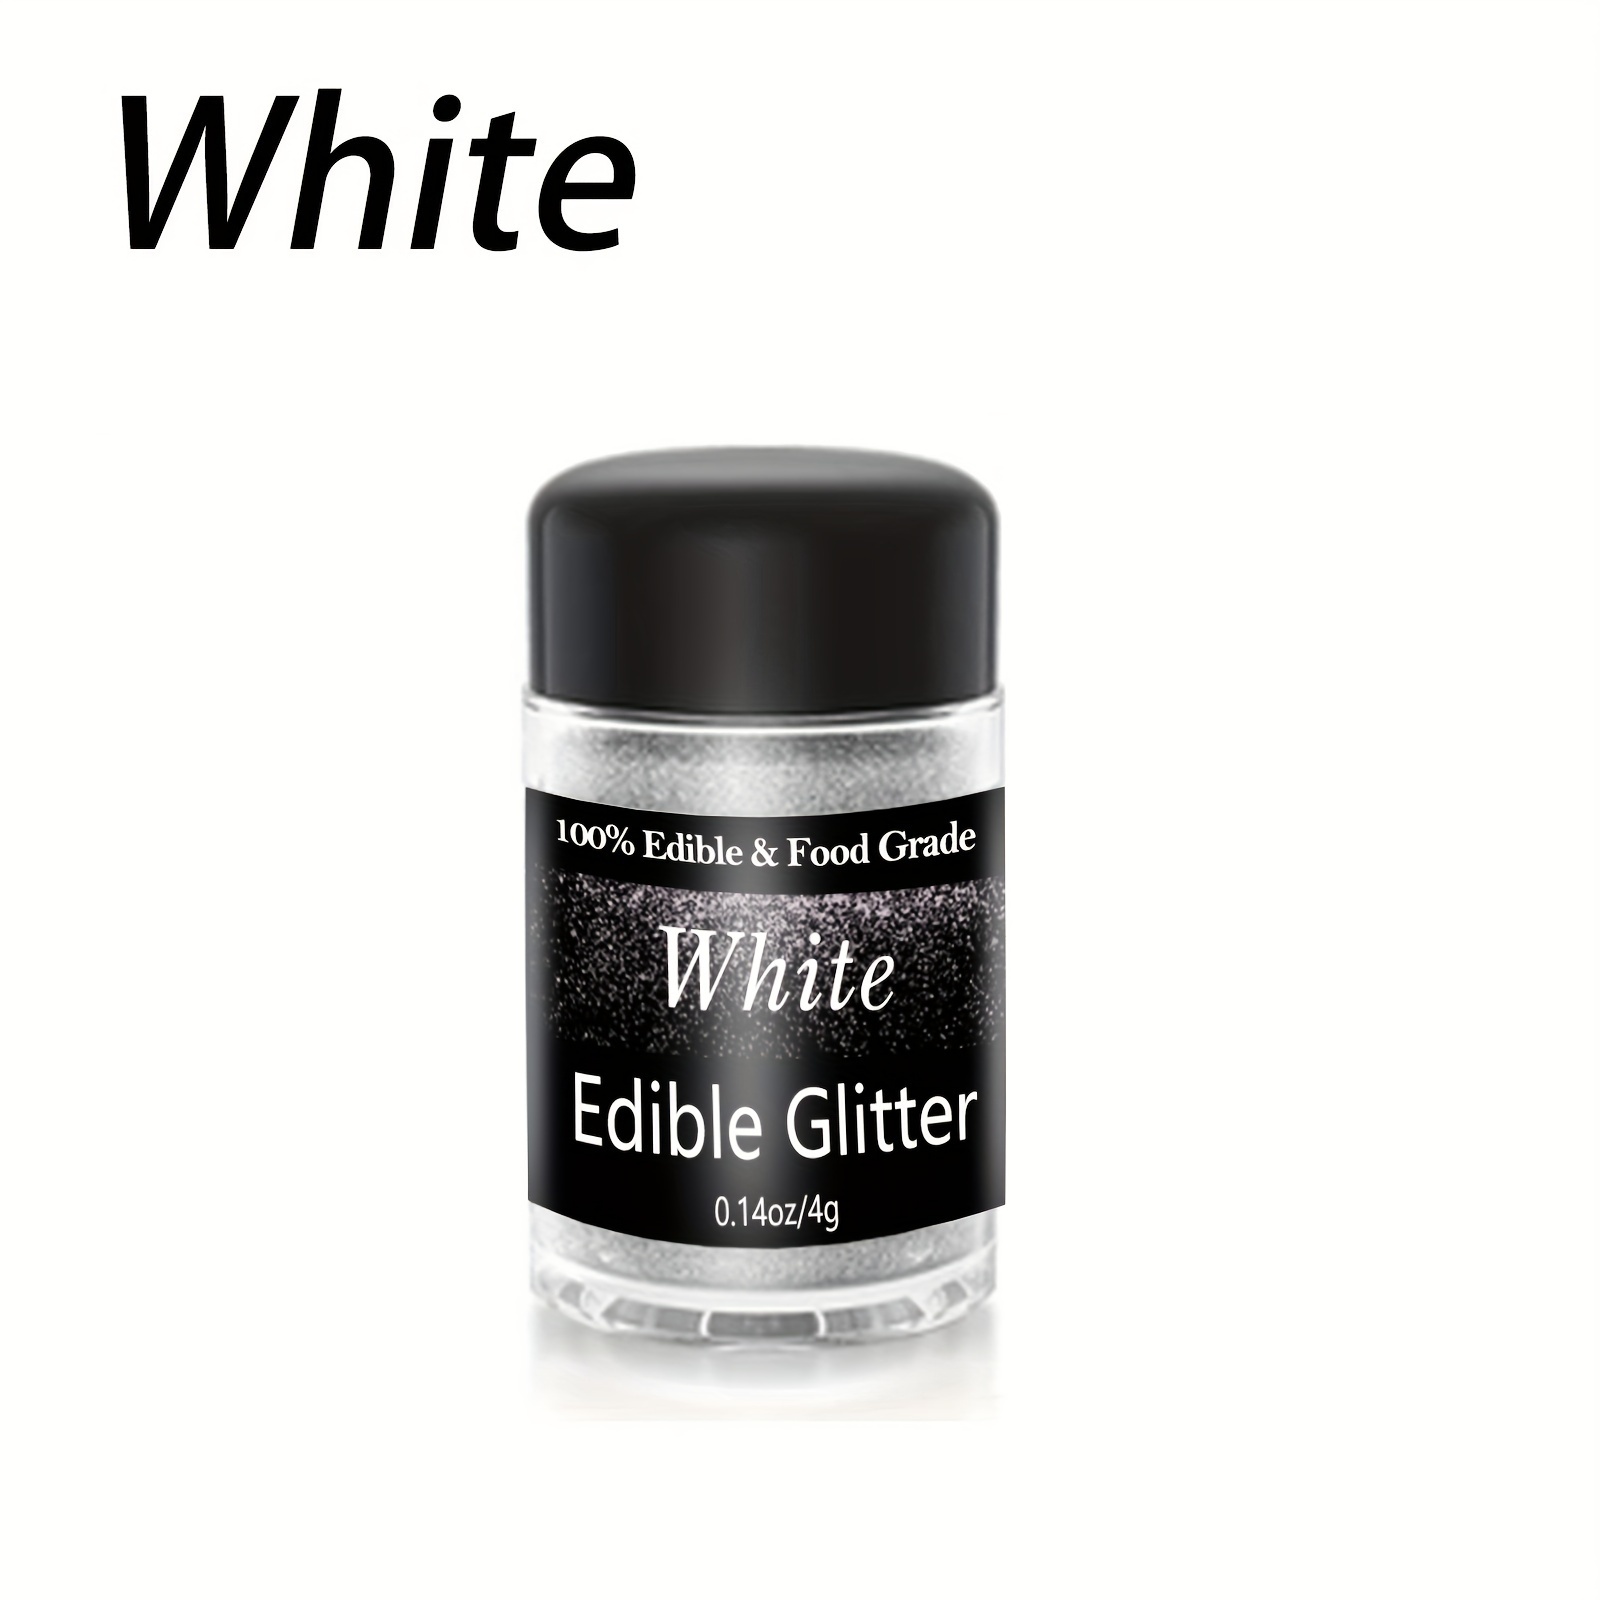 White Edible Glitter